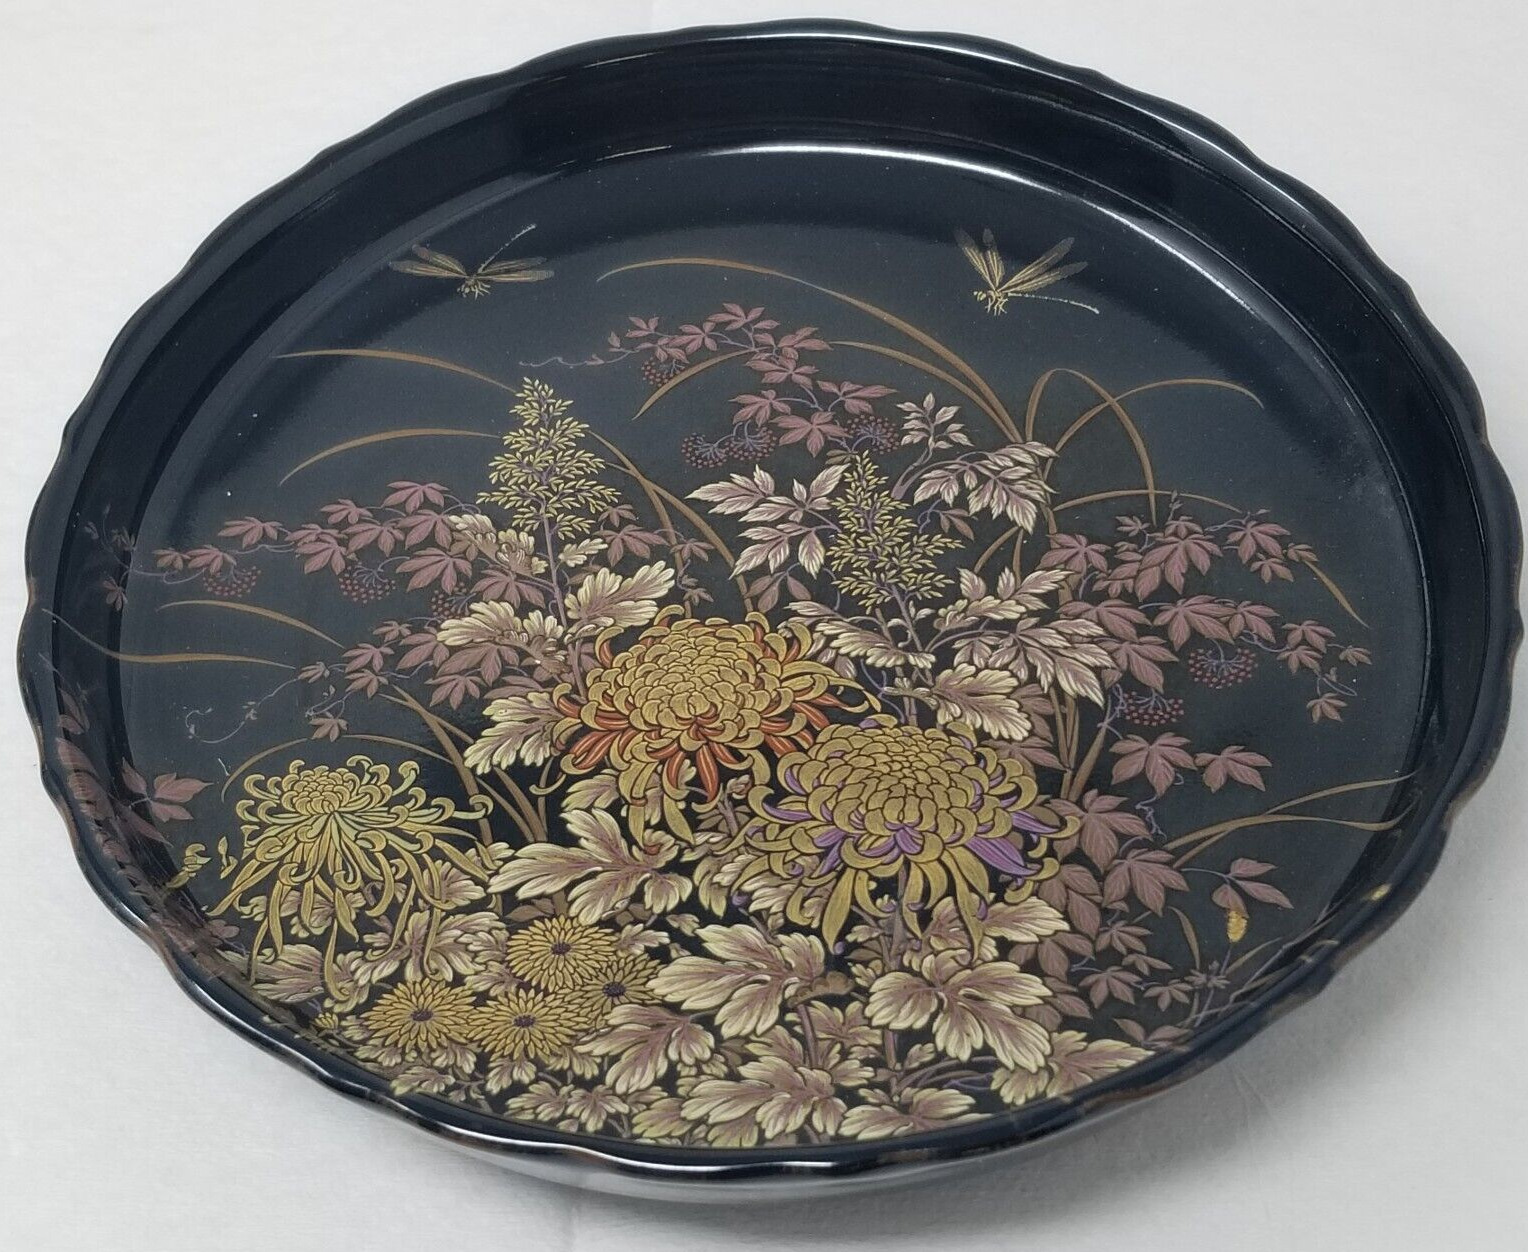 Tenmoku-Kiku Dish Shibata Scalloped Edges Dragonflies Black Porcelain Vintage